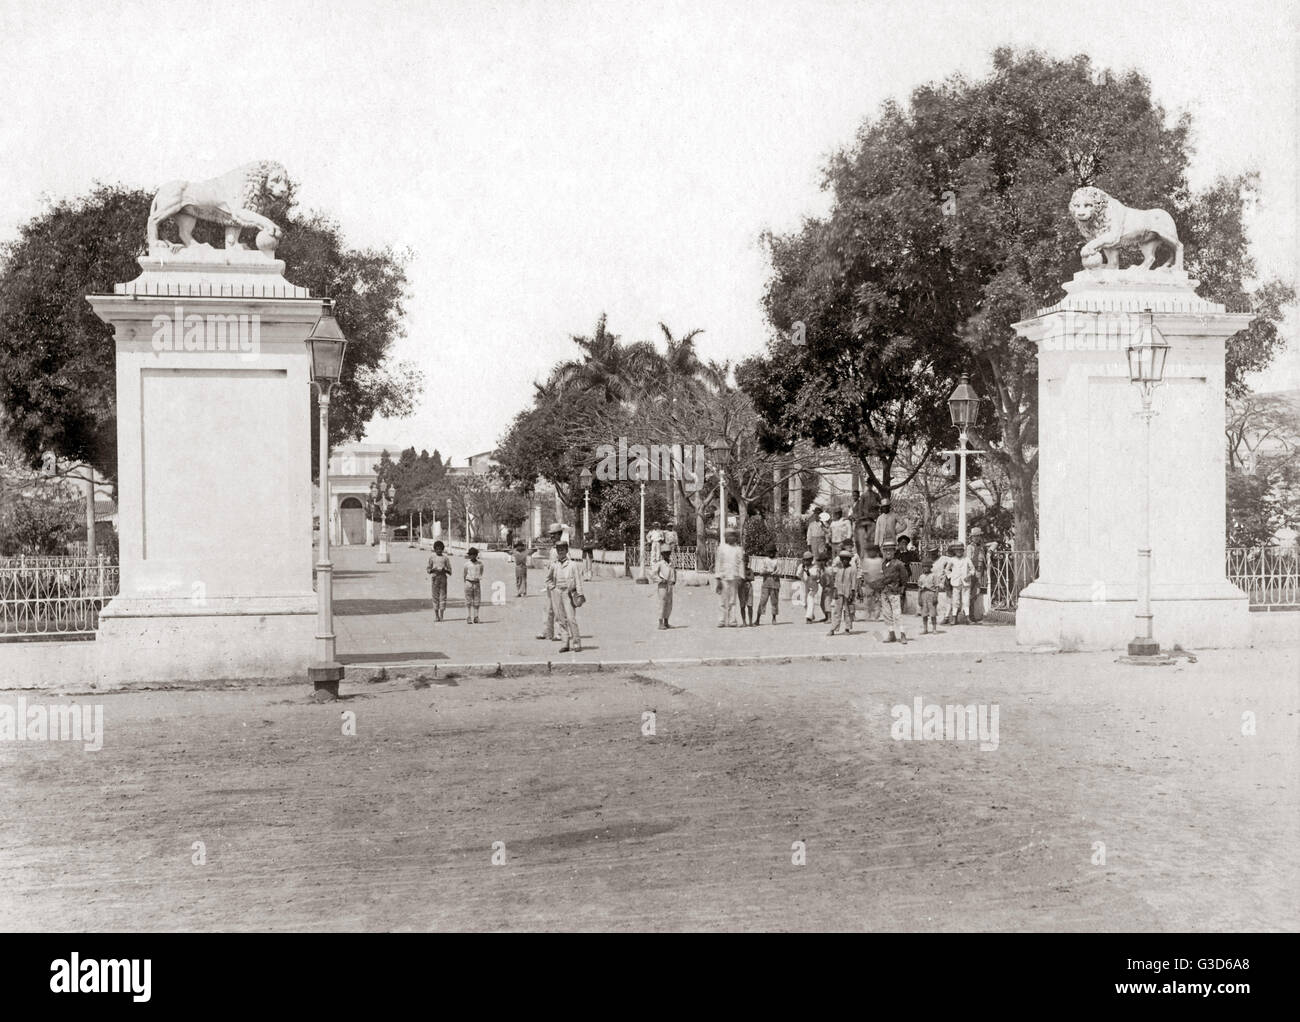 Entrée à la Plaza, probablement Cienfuegos, Cuba, vers 1900 Banque D'Images